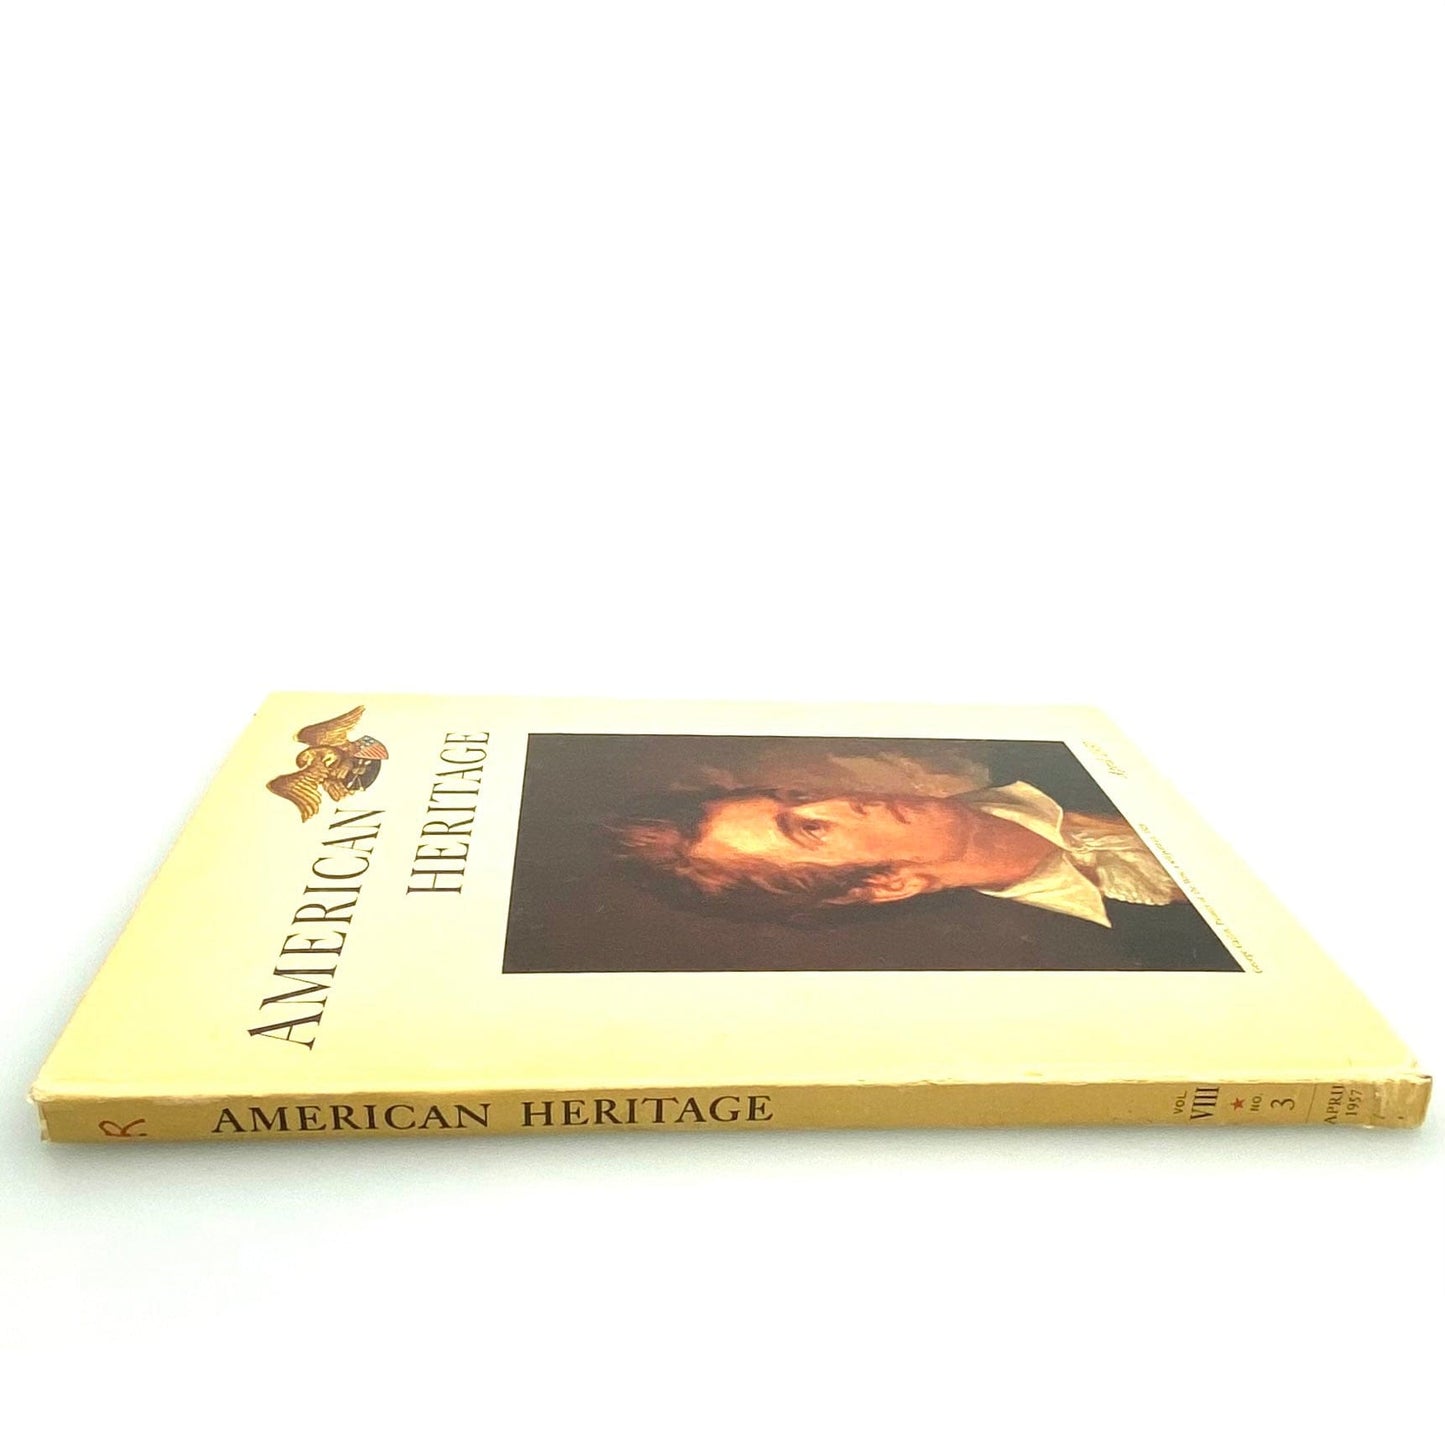 Vintage American Heritage Volume VIII No 3 April 1957 Hardcover History Book